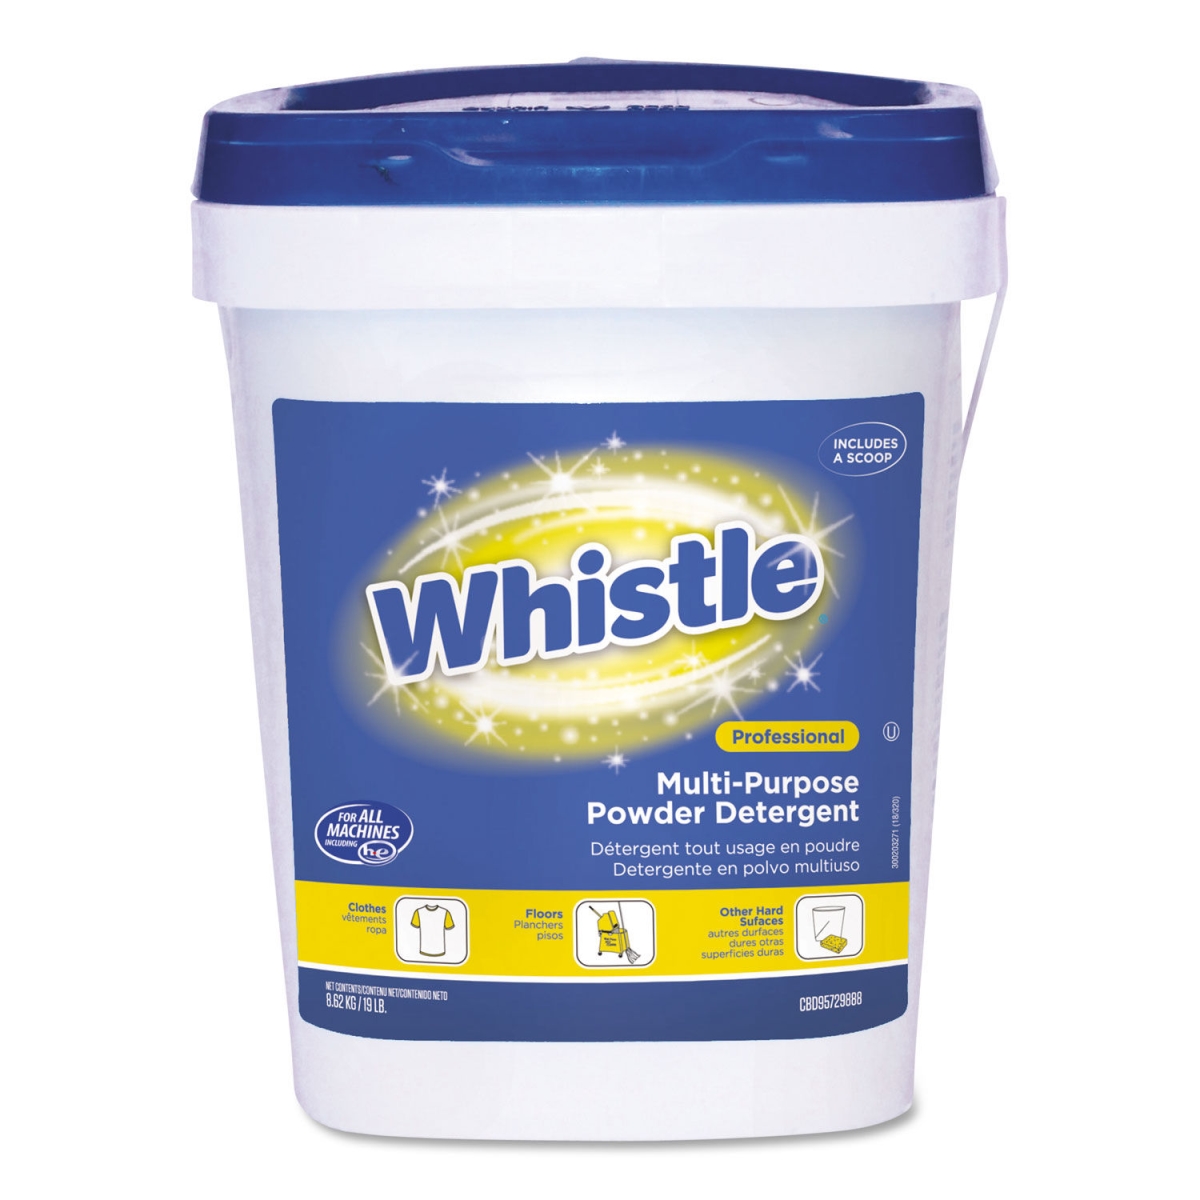 Picture of Diversey DVOCBD95729888 Whistle Multi-Purpose Powder Detergent